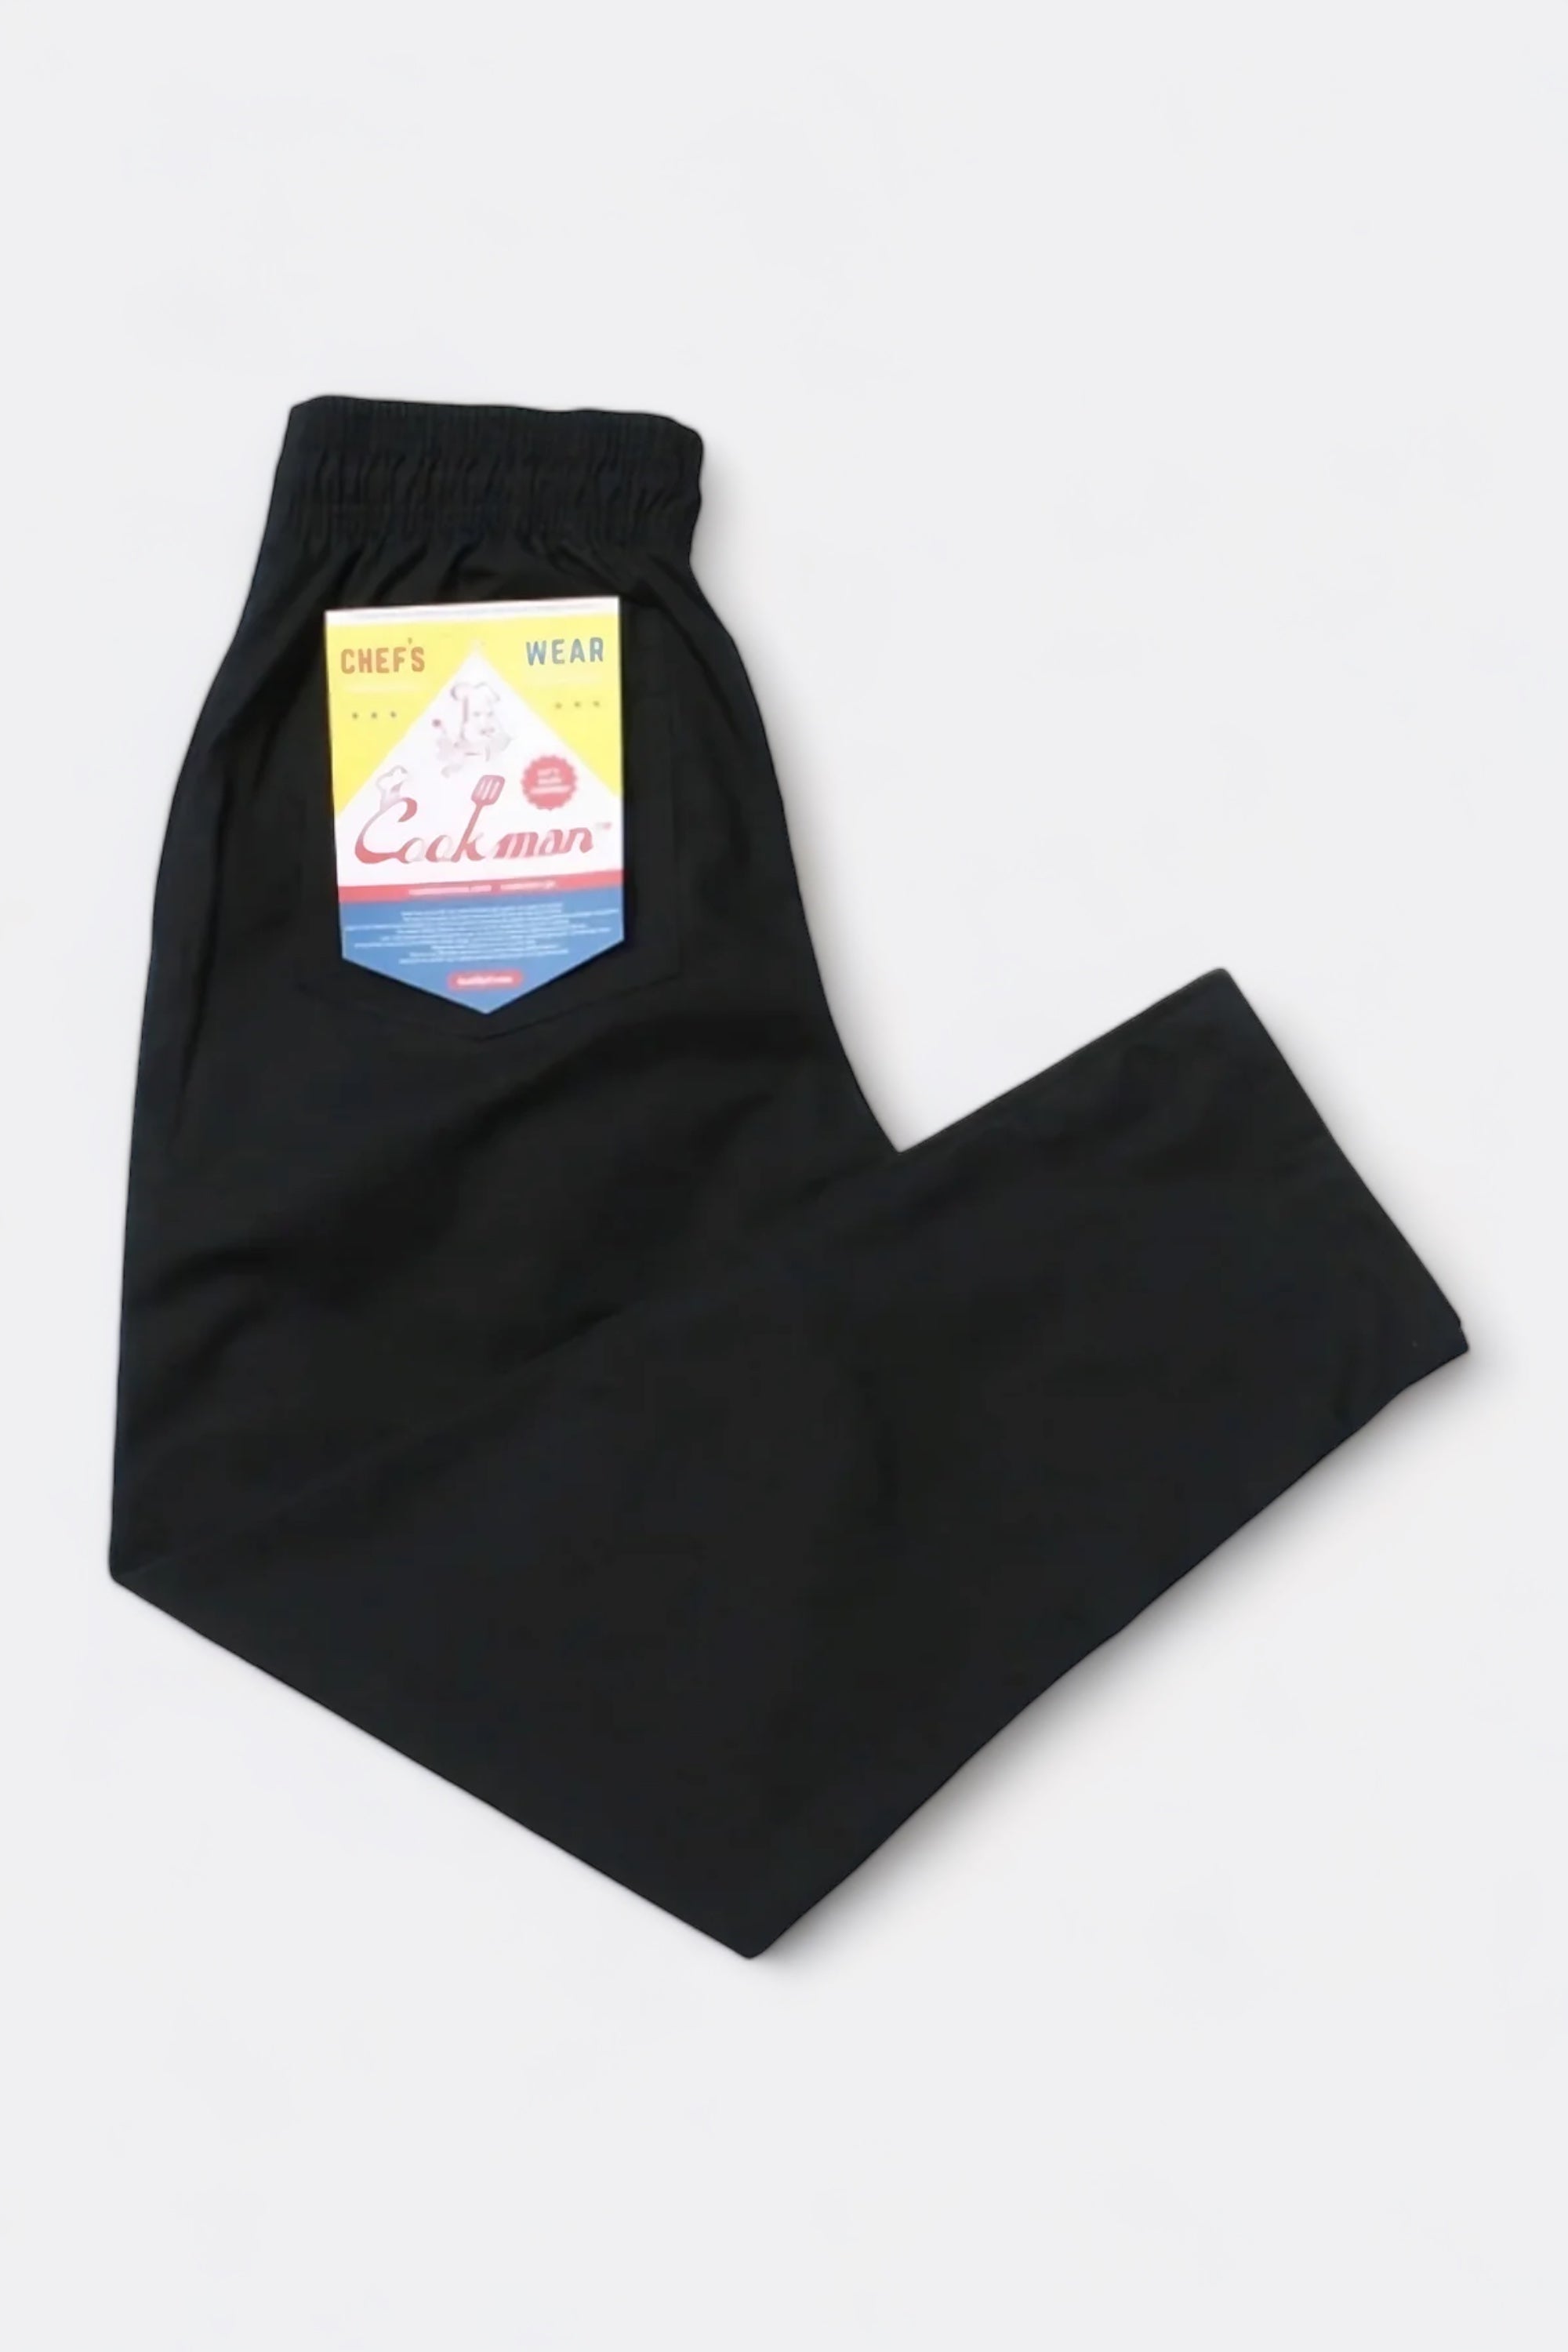 Cookman - Chef Pants Ripstop (Black)